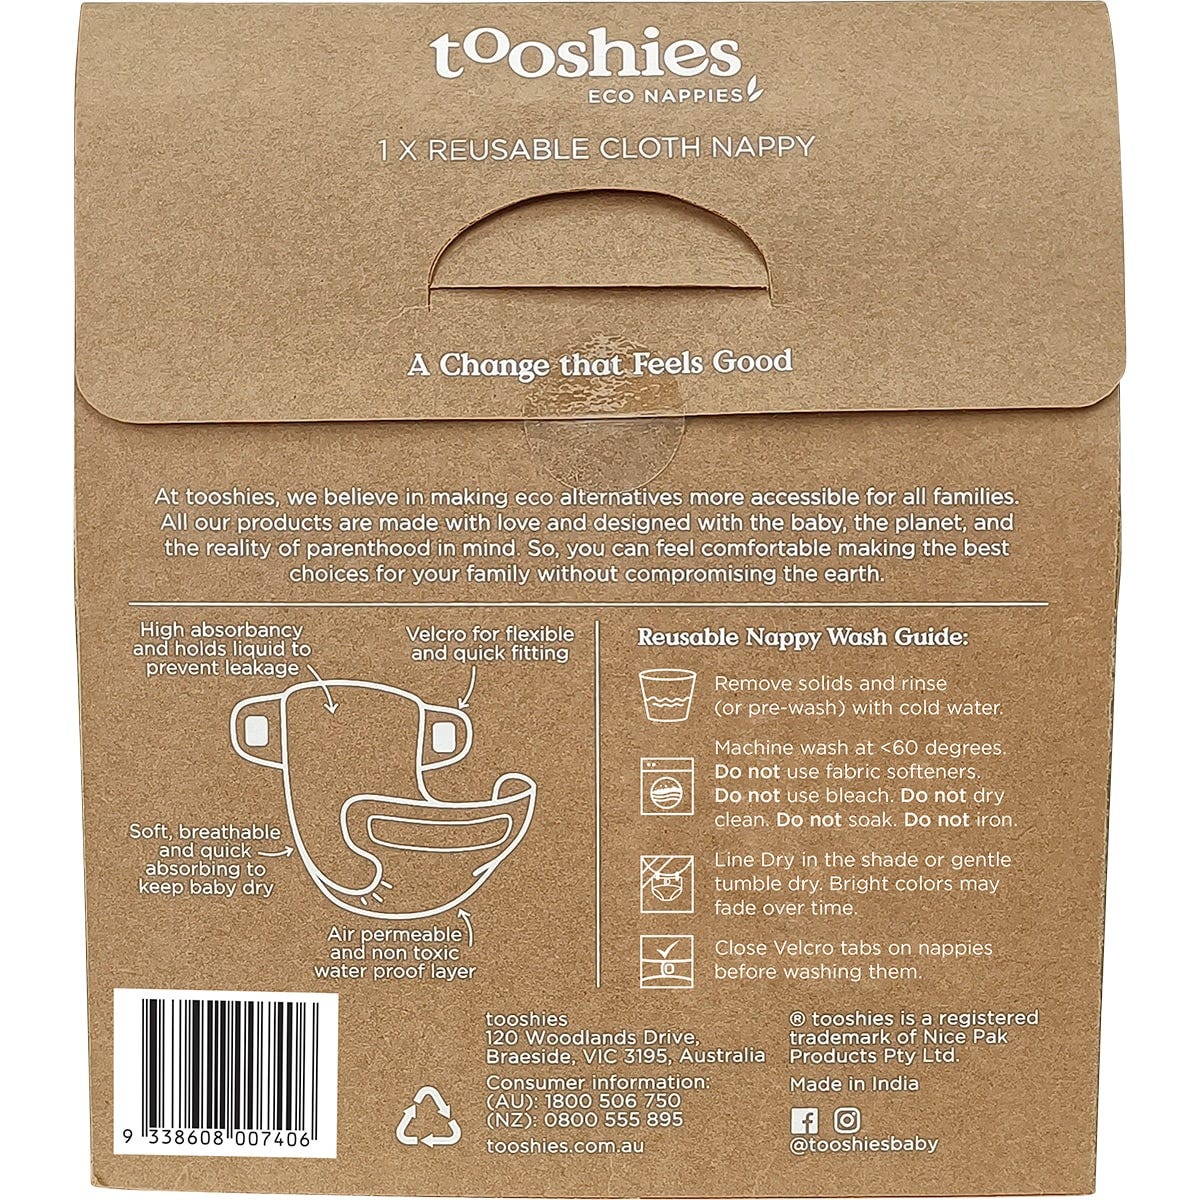 tooshies Reusable Cloth Nappies Reviews